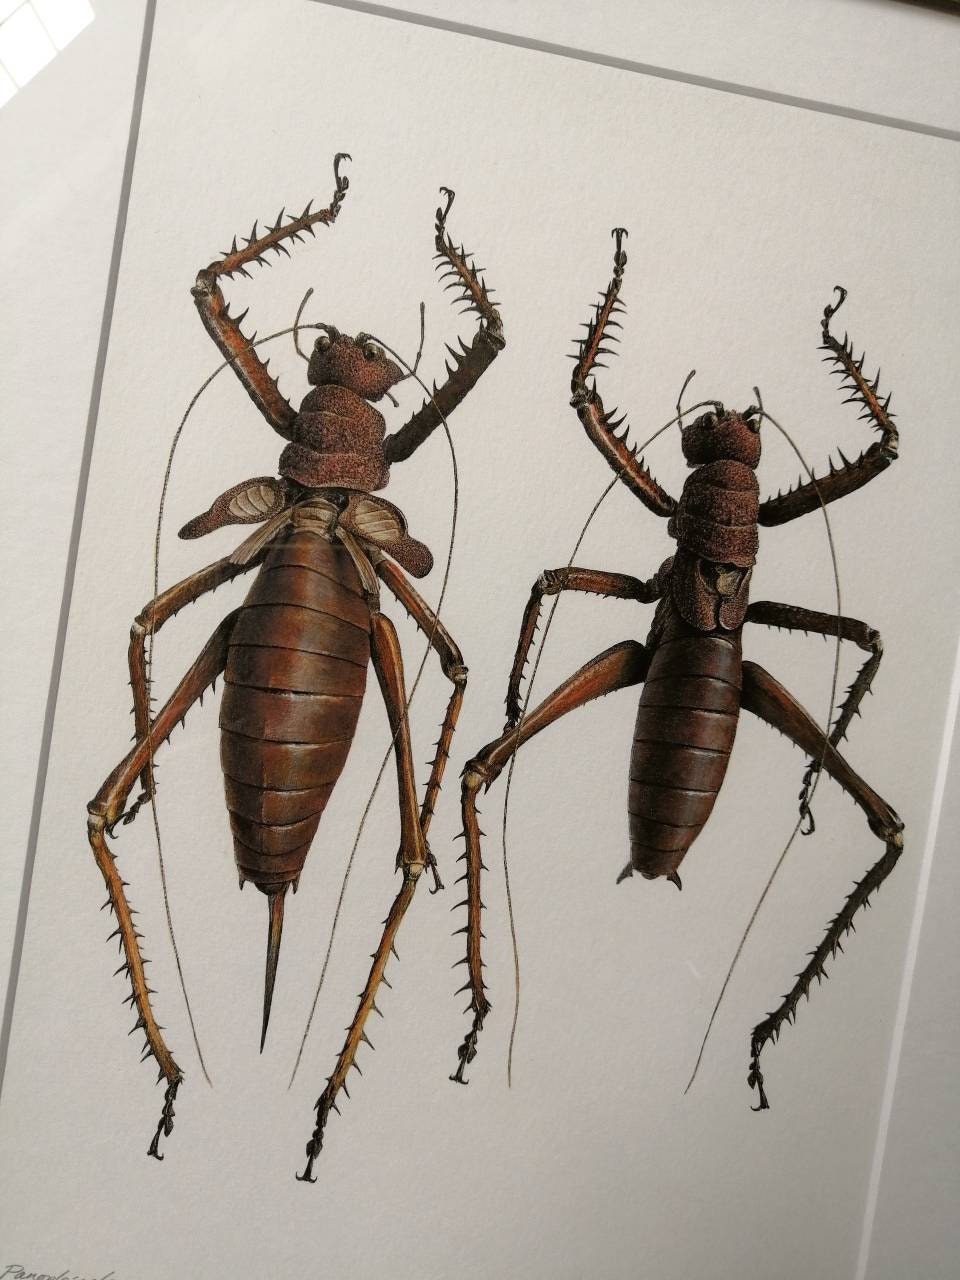 Framed Original Artwork - Panoploscelis specularis Female & Male pair